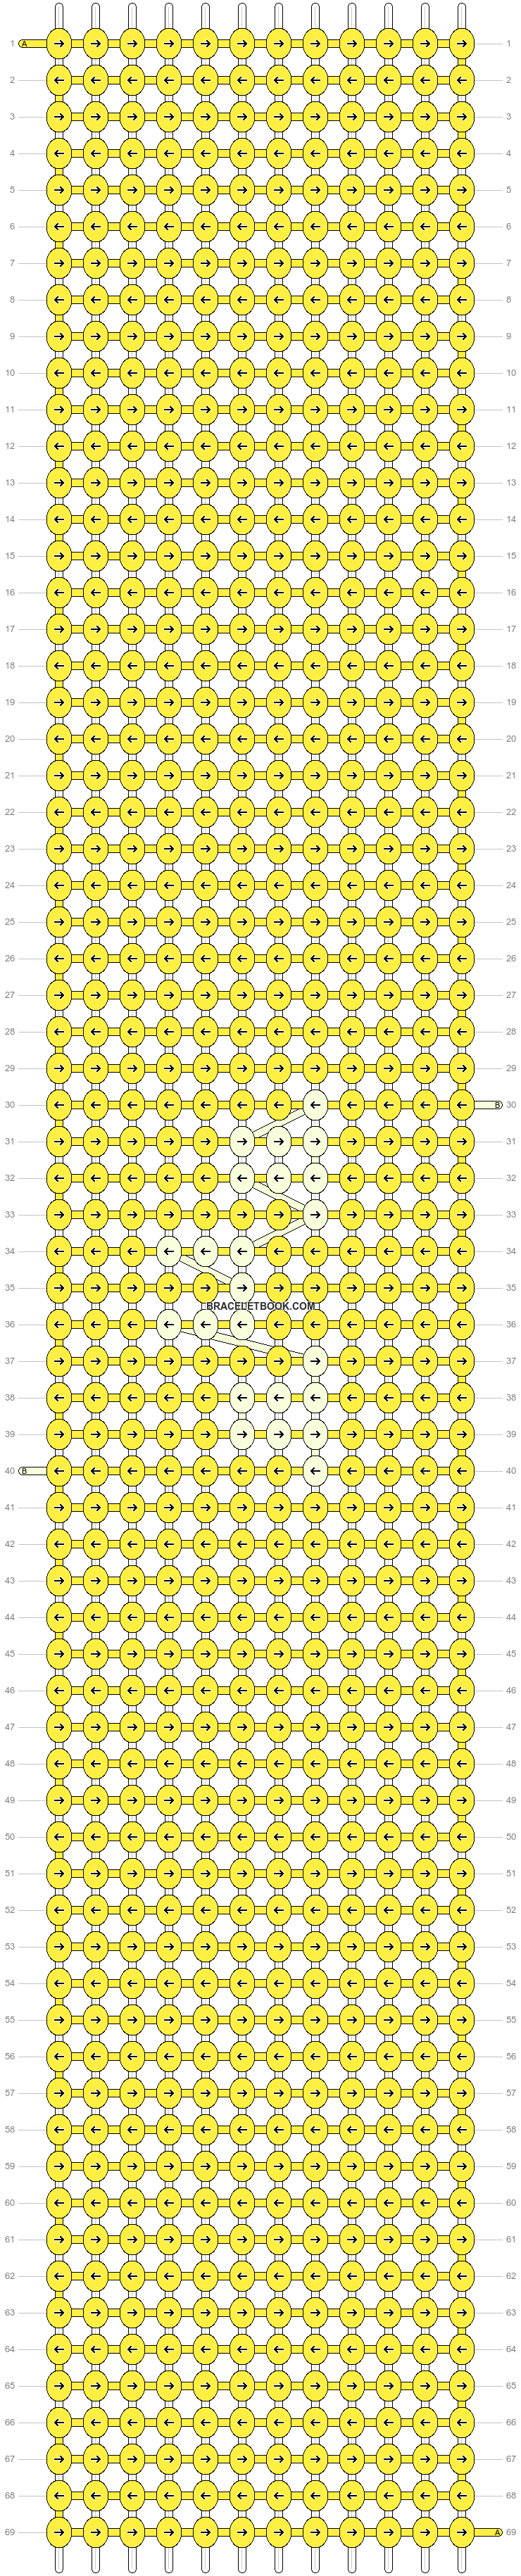 Alpha pattern #47078 variation #71858 pattern